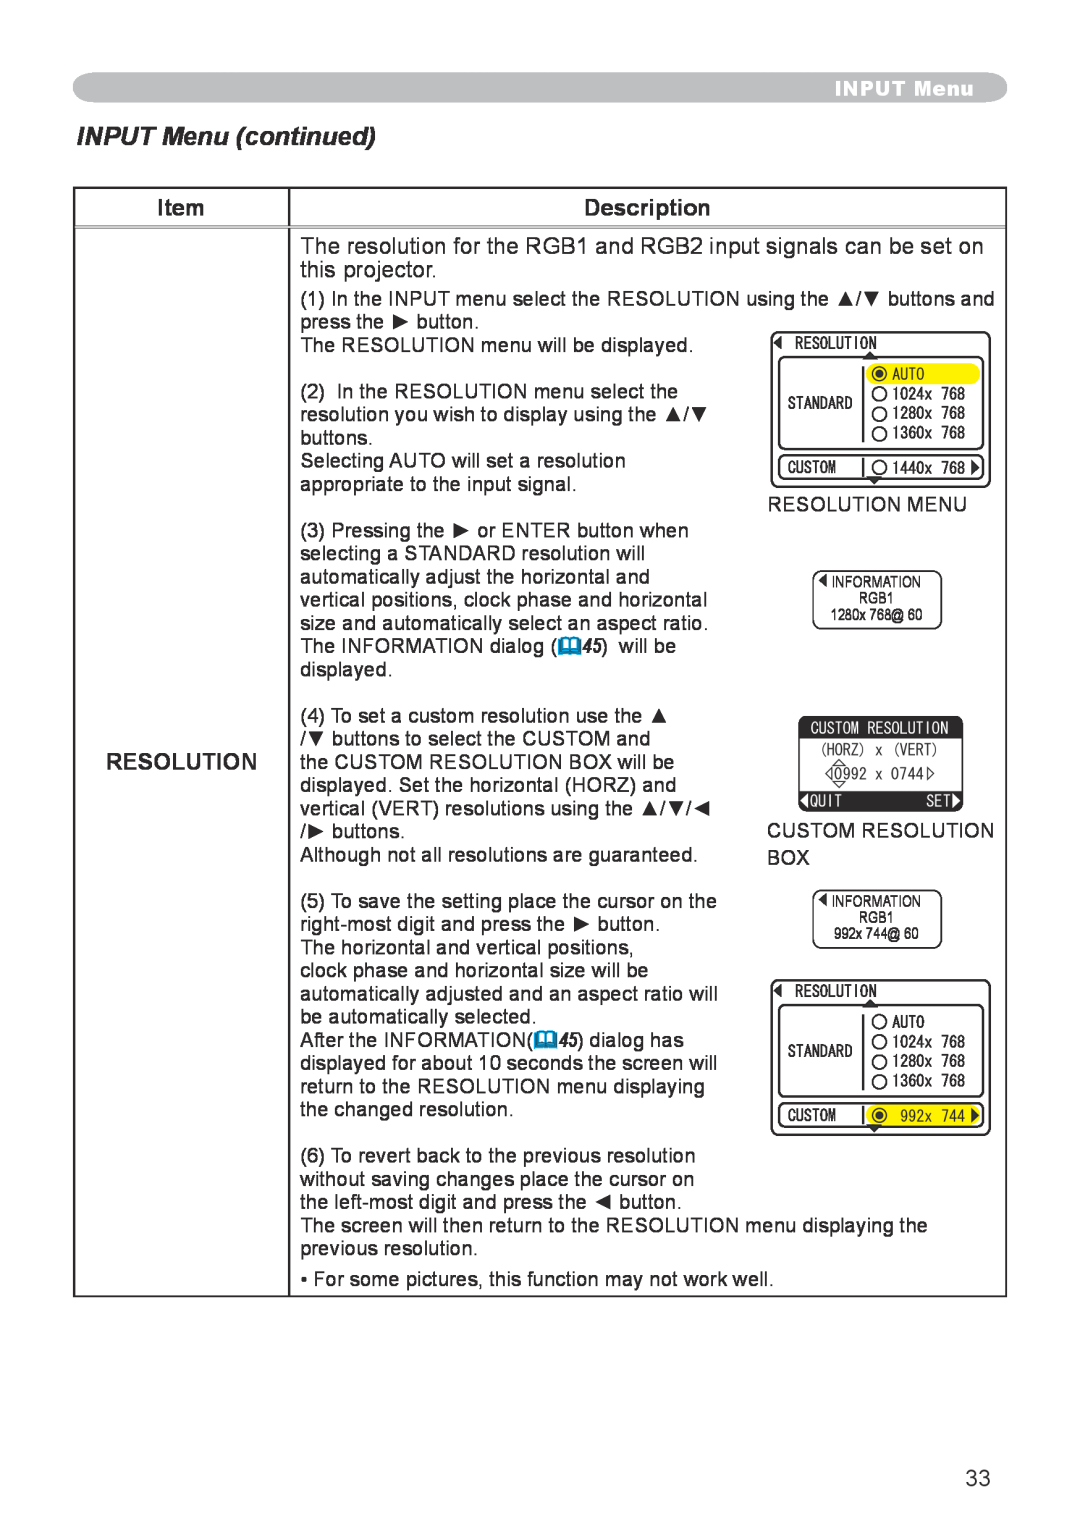 Hitachi CP-X600 user manual INPUT Menu continued, Description, Resolution, The RESOLUTION menu will be displayed 